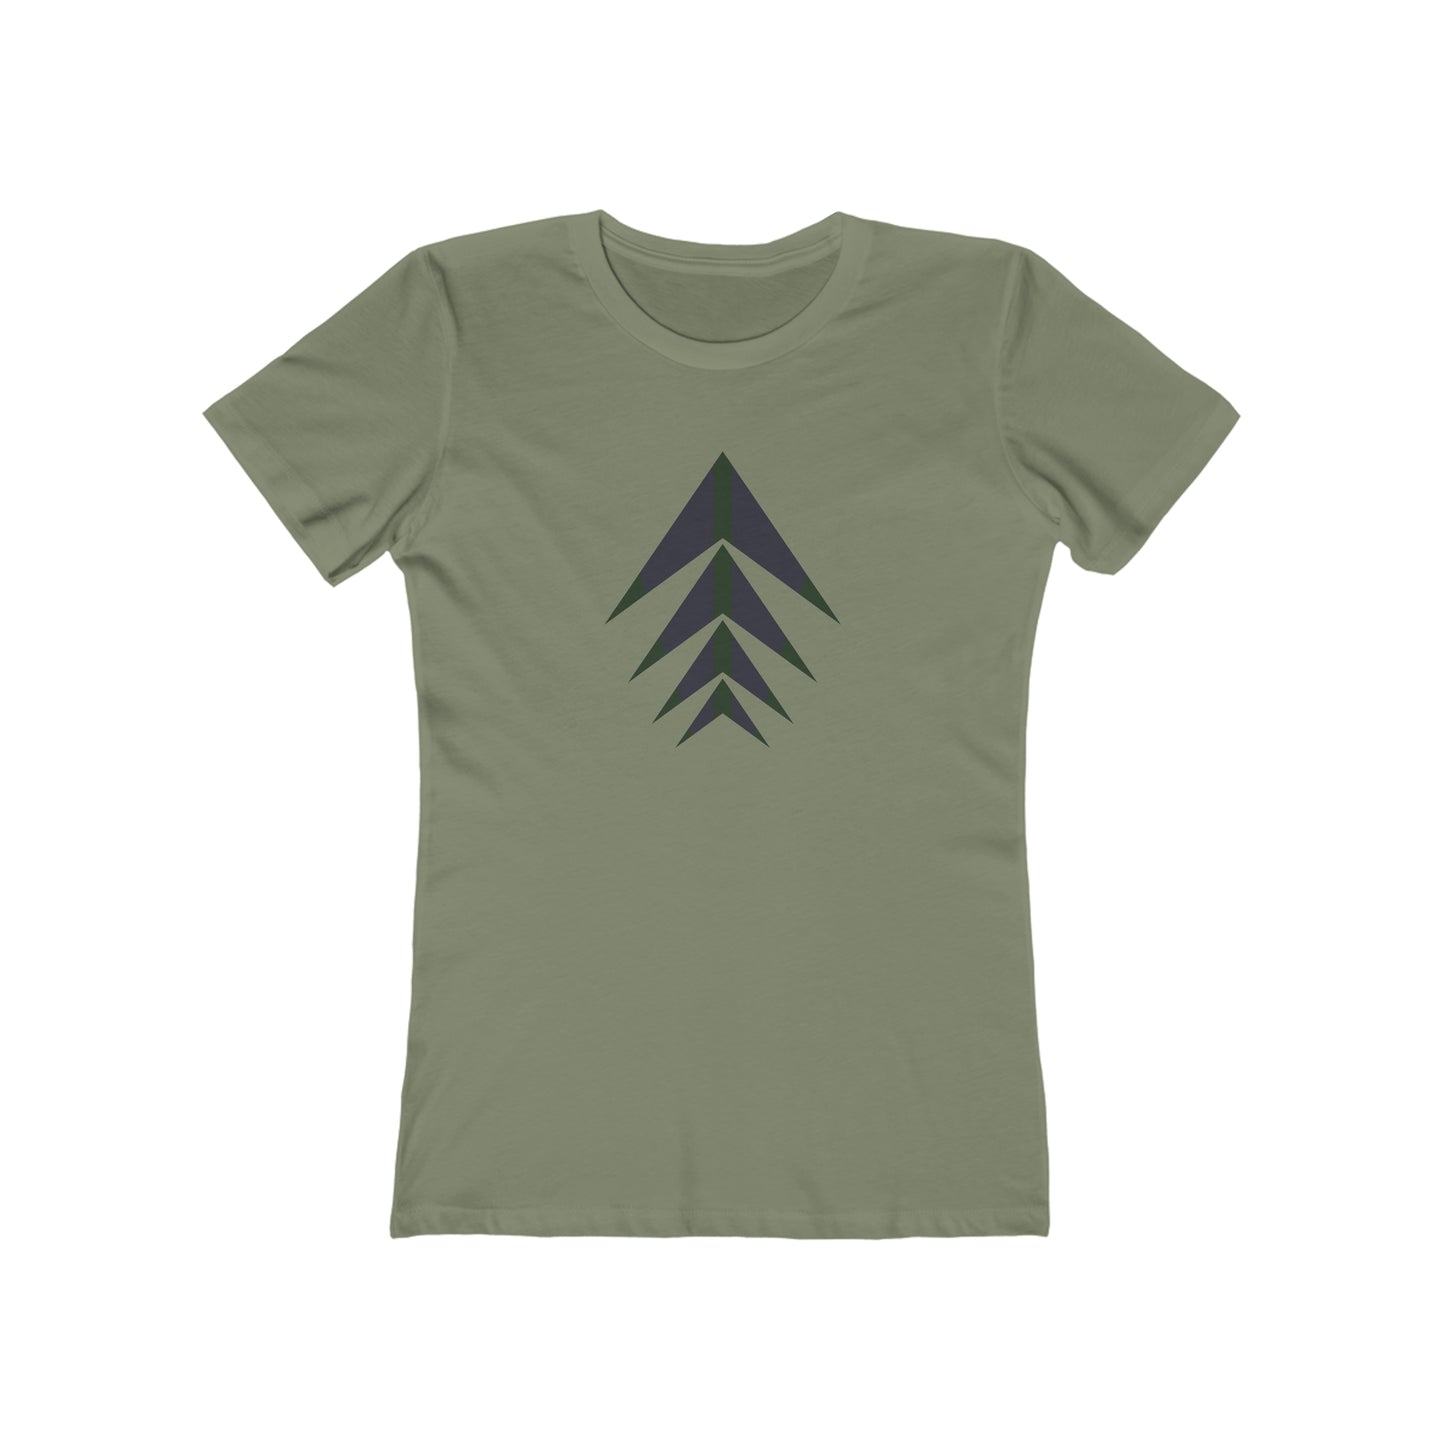 Arrows - Women's T-Shirt